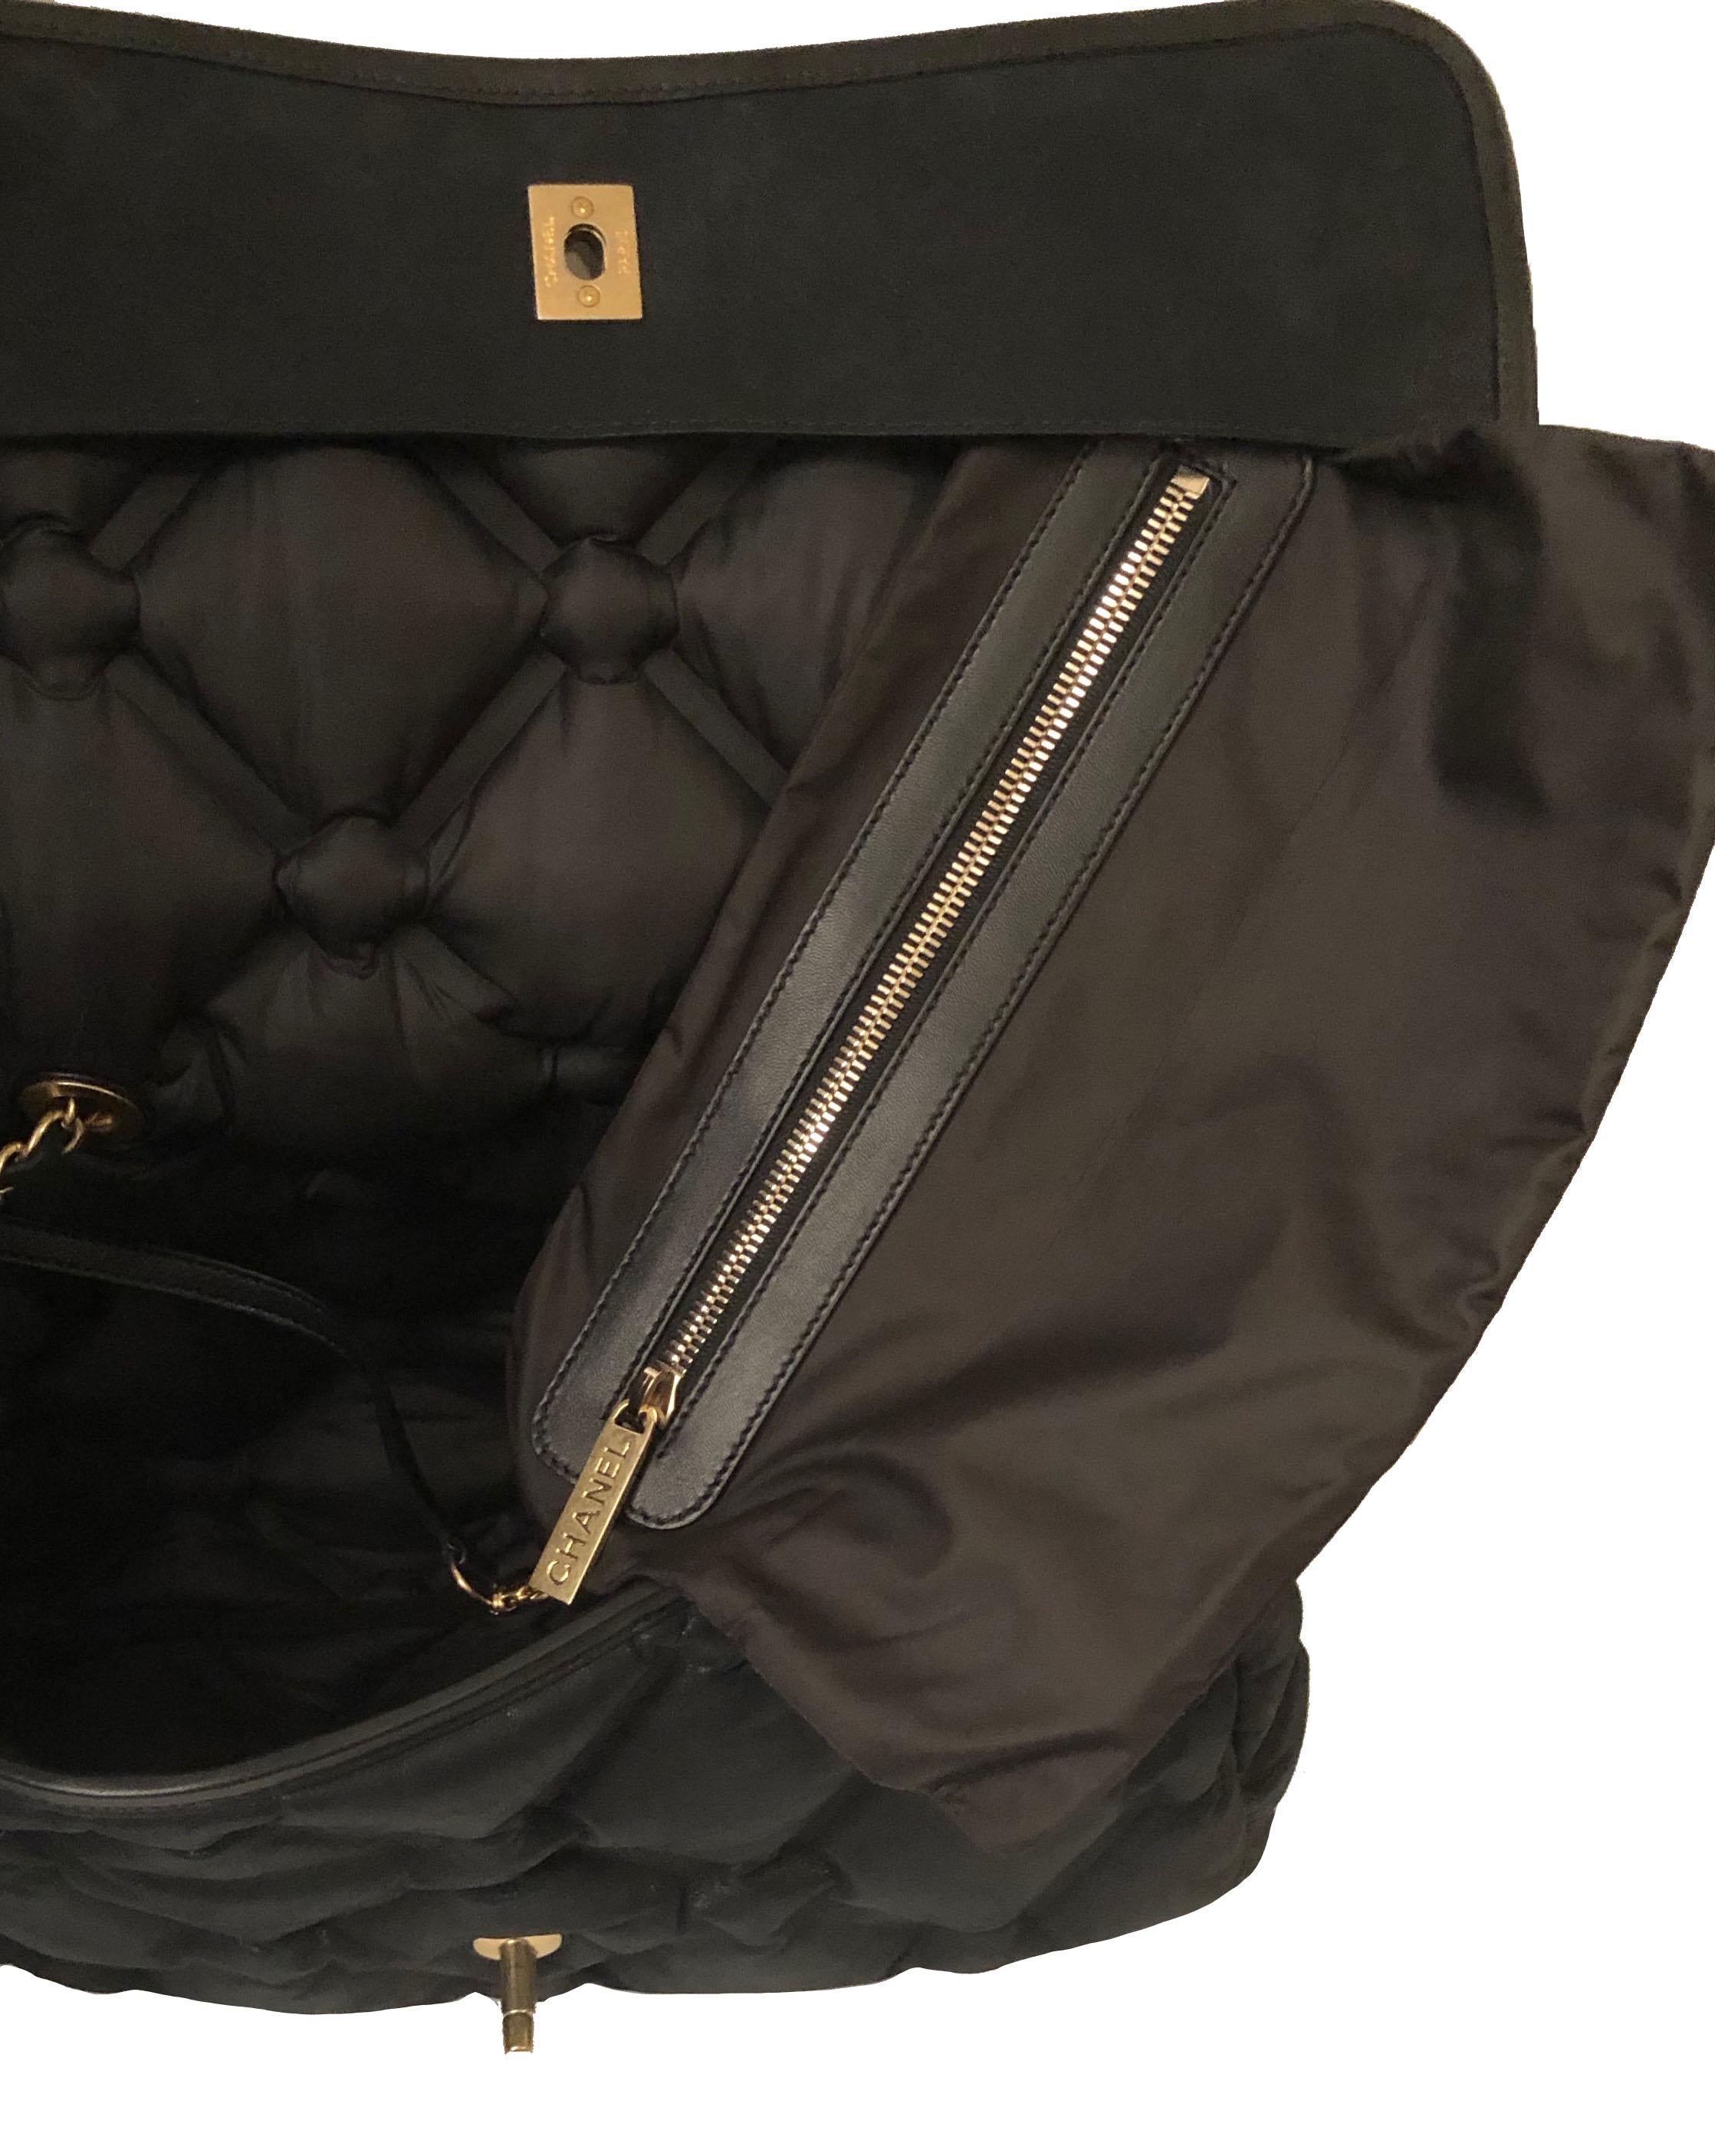 Chanel Black Iridescent Leather Jumbo Chesterfield Bag 2